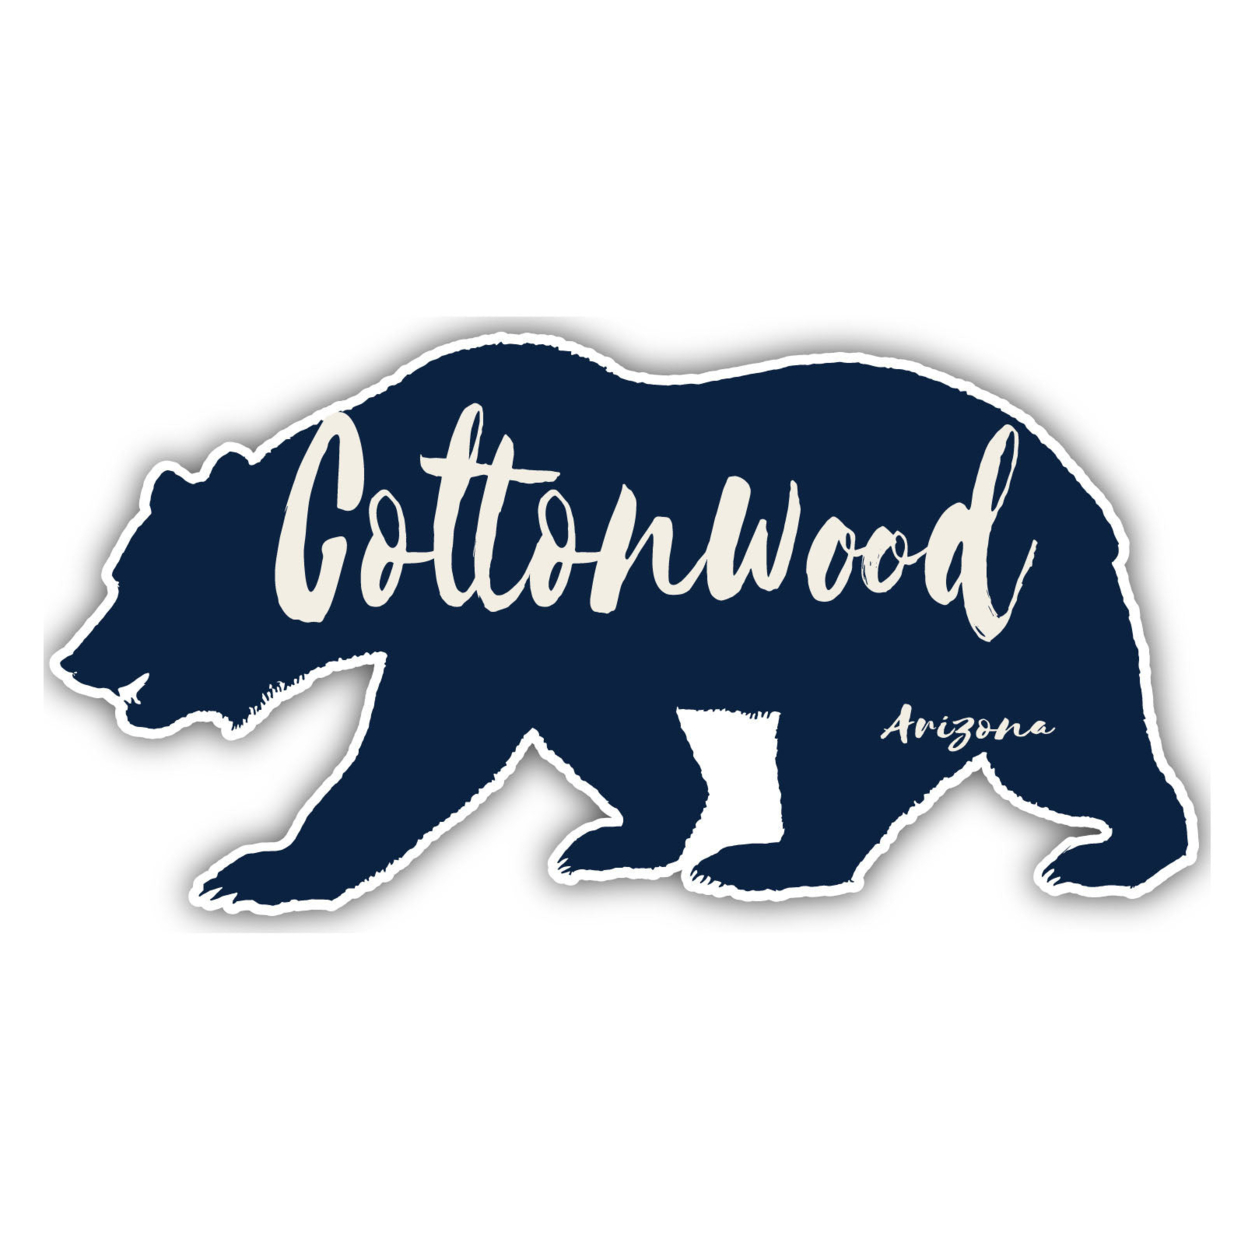 Cottonwood Arizona Souvenir Decorative Stickers (Choose Theme And Size) - Single Unit, 8-Inch, Bear